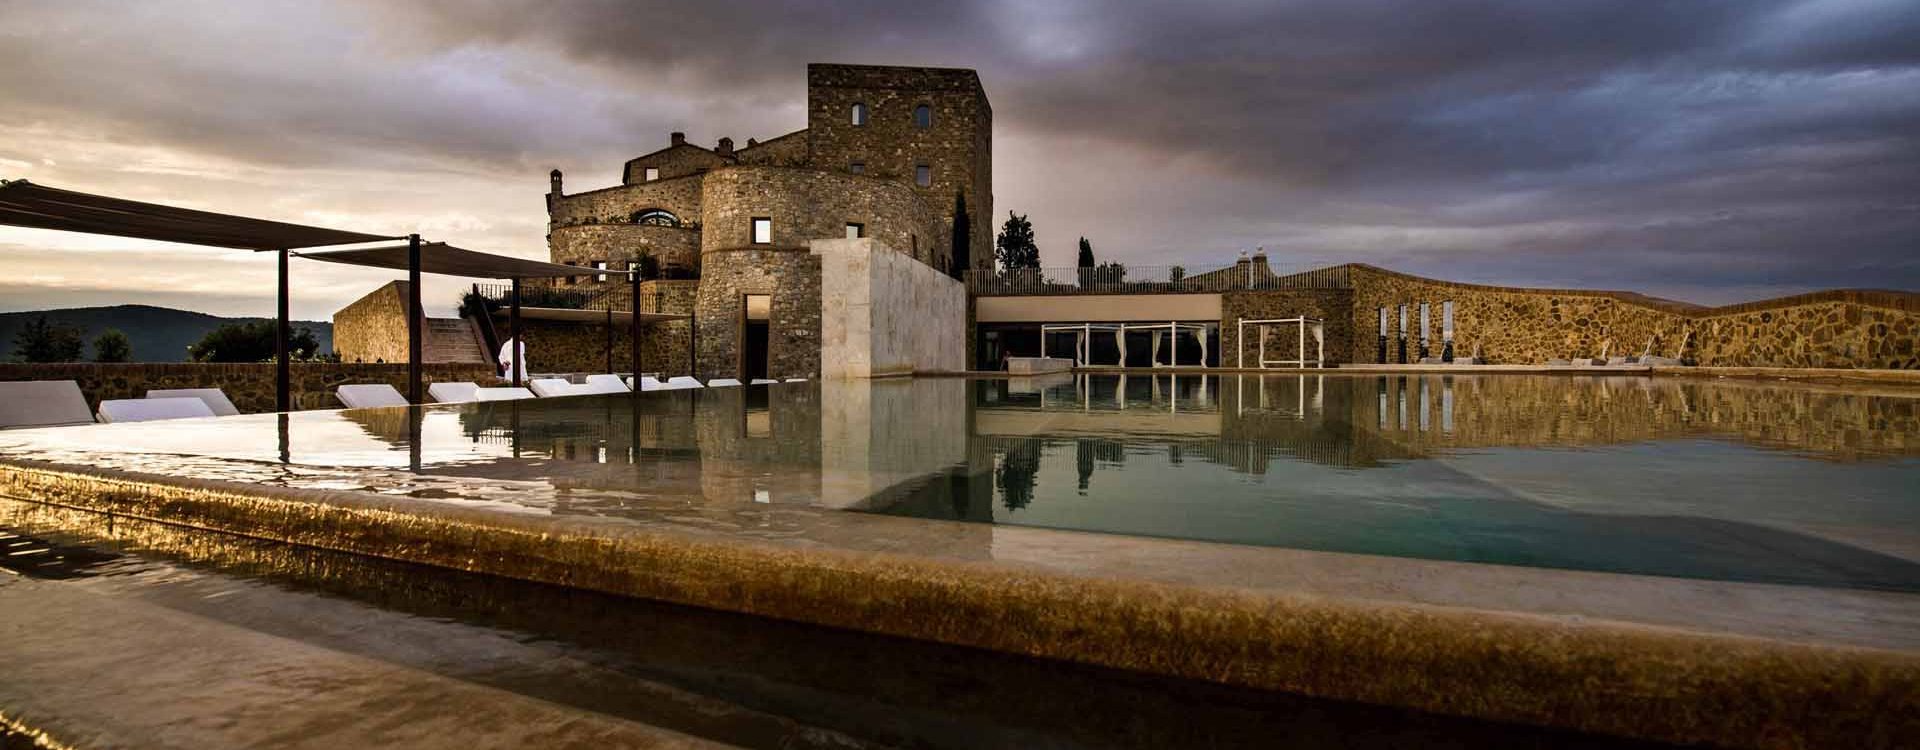 castello di velona resort, thermal spa & winery Montalcino 00014